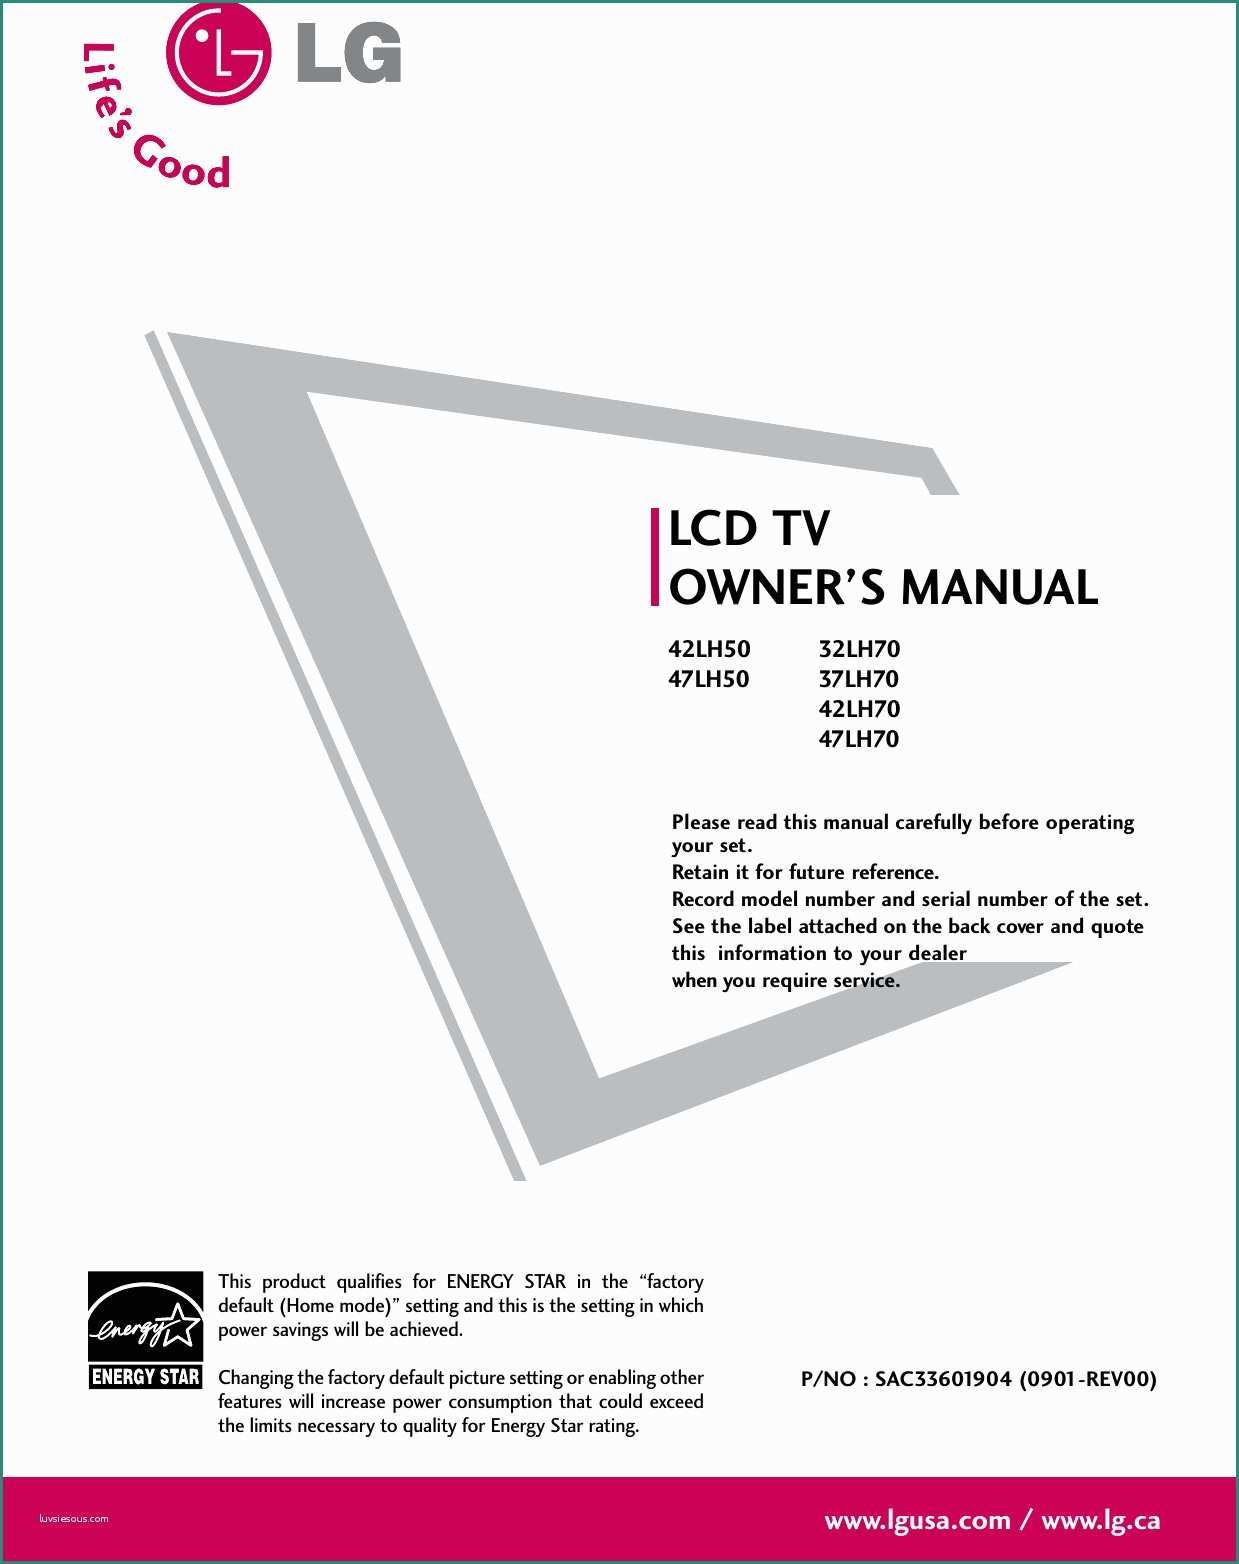 Simboli Elettrici Download E 32lh70uc Lcd Tv Monitor User Manual Sac 4c Copy Lg